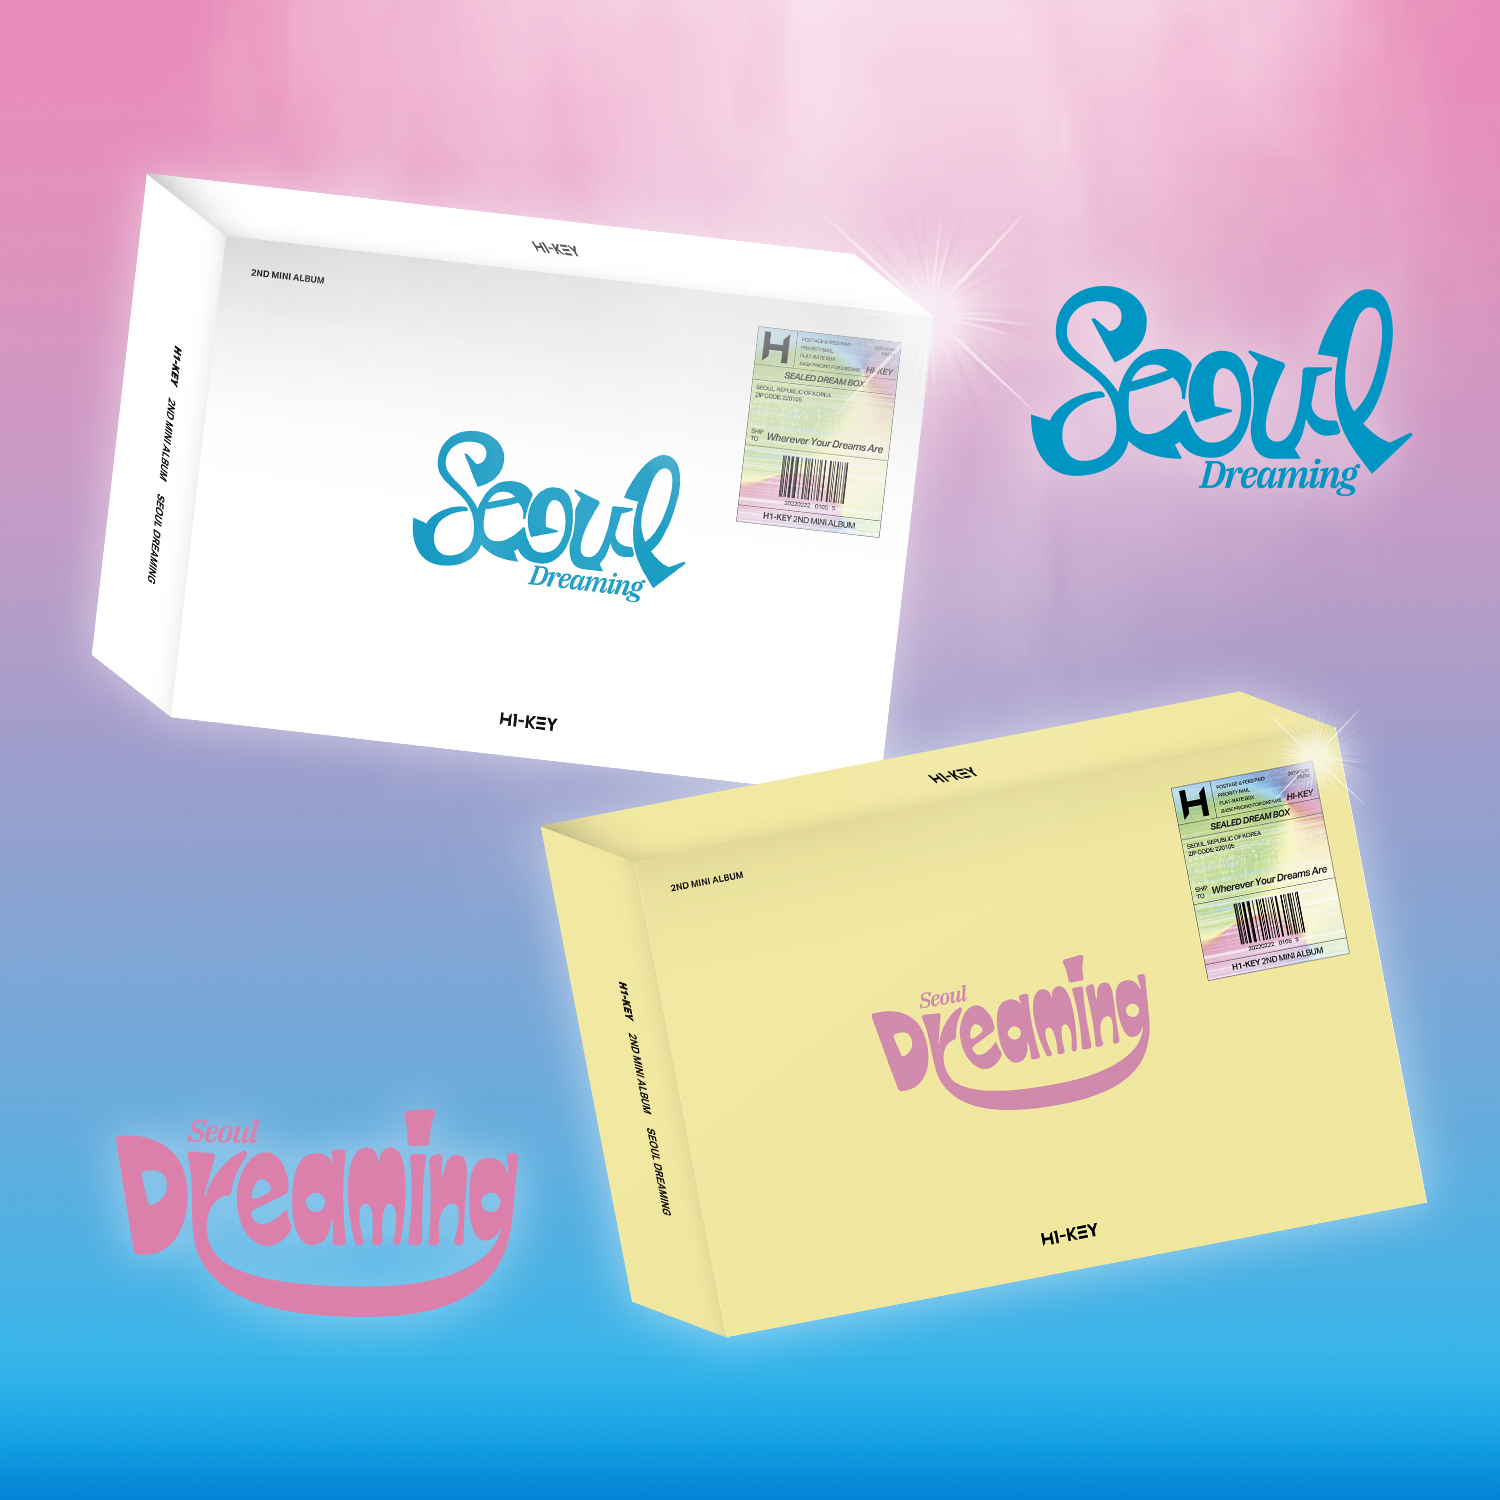 [全款 裸专][2CD 套装] H1-KEY - 迷你2辑 [Seoul Dreaming] (Seoul Ver. + Dreaming Ver.)_四站联合